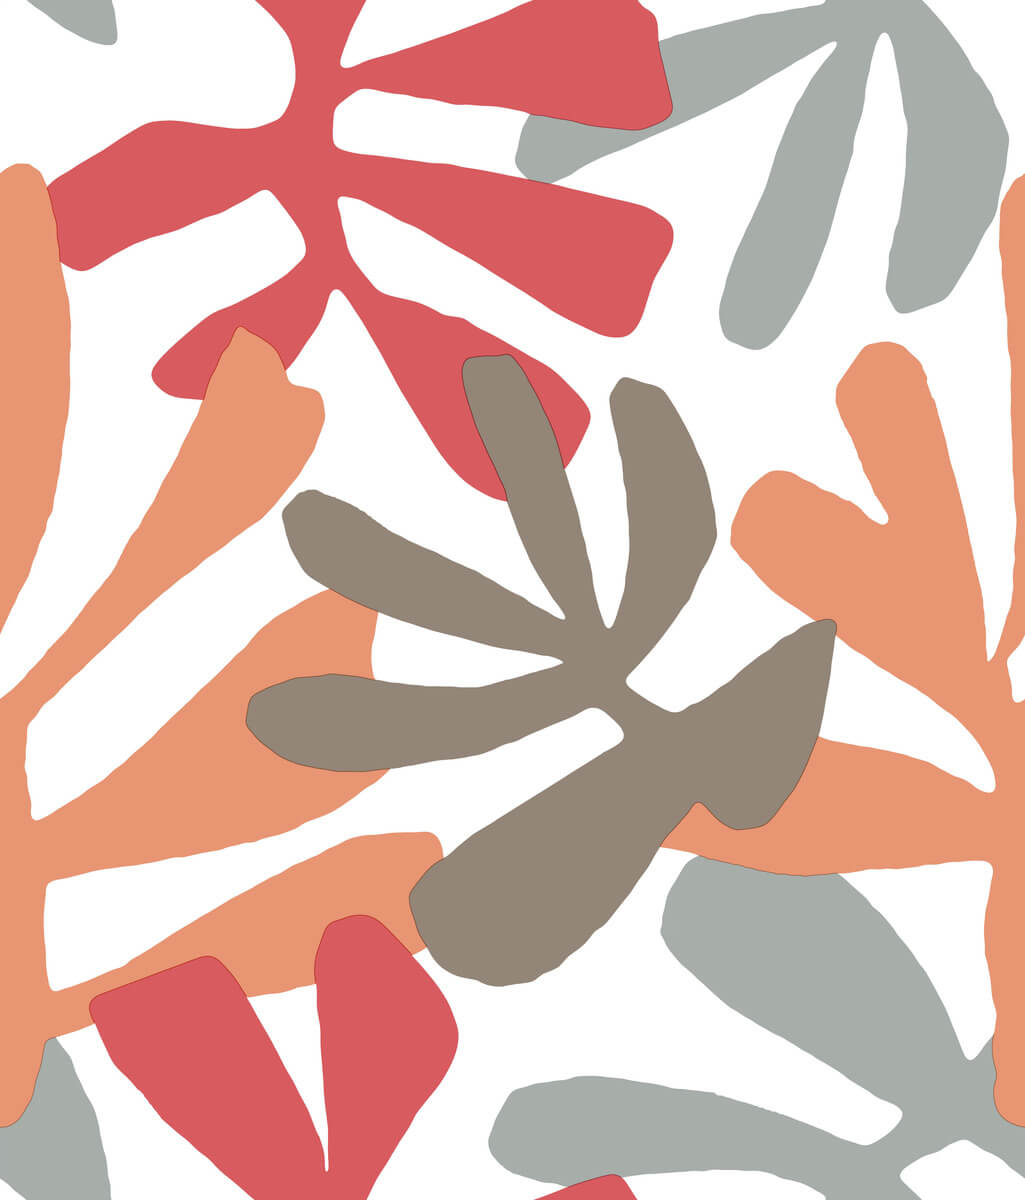 Kinetic Tropical Peel & Stick Wallpaper - Coral & Beige